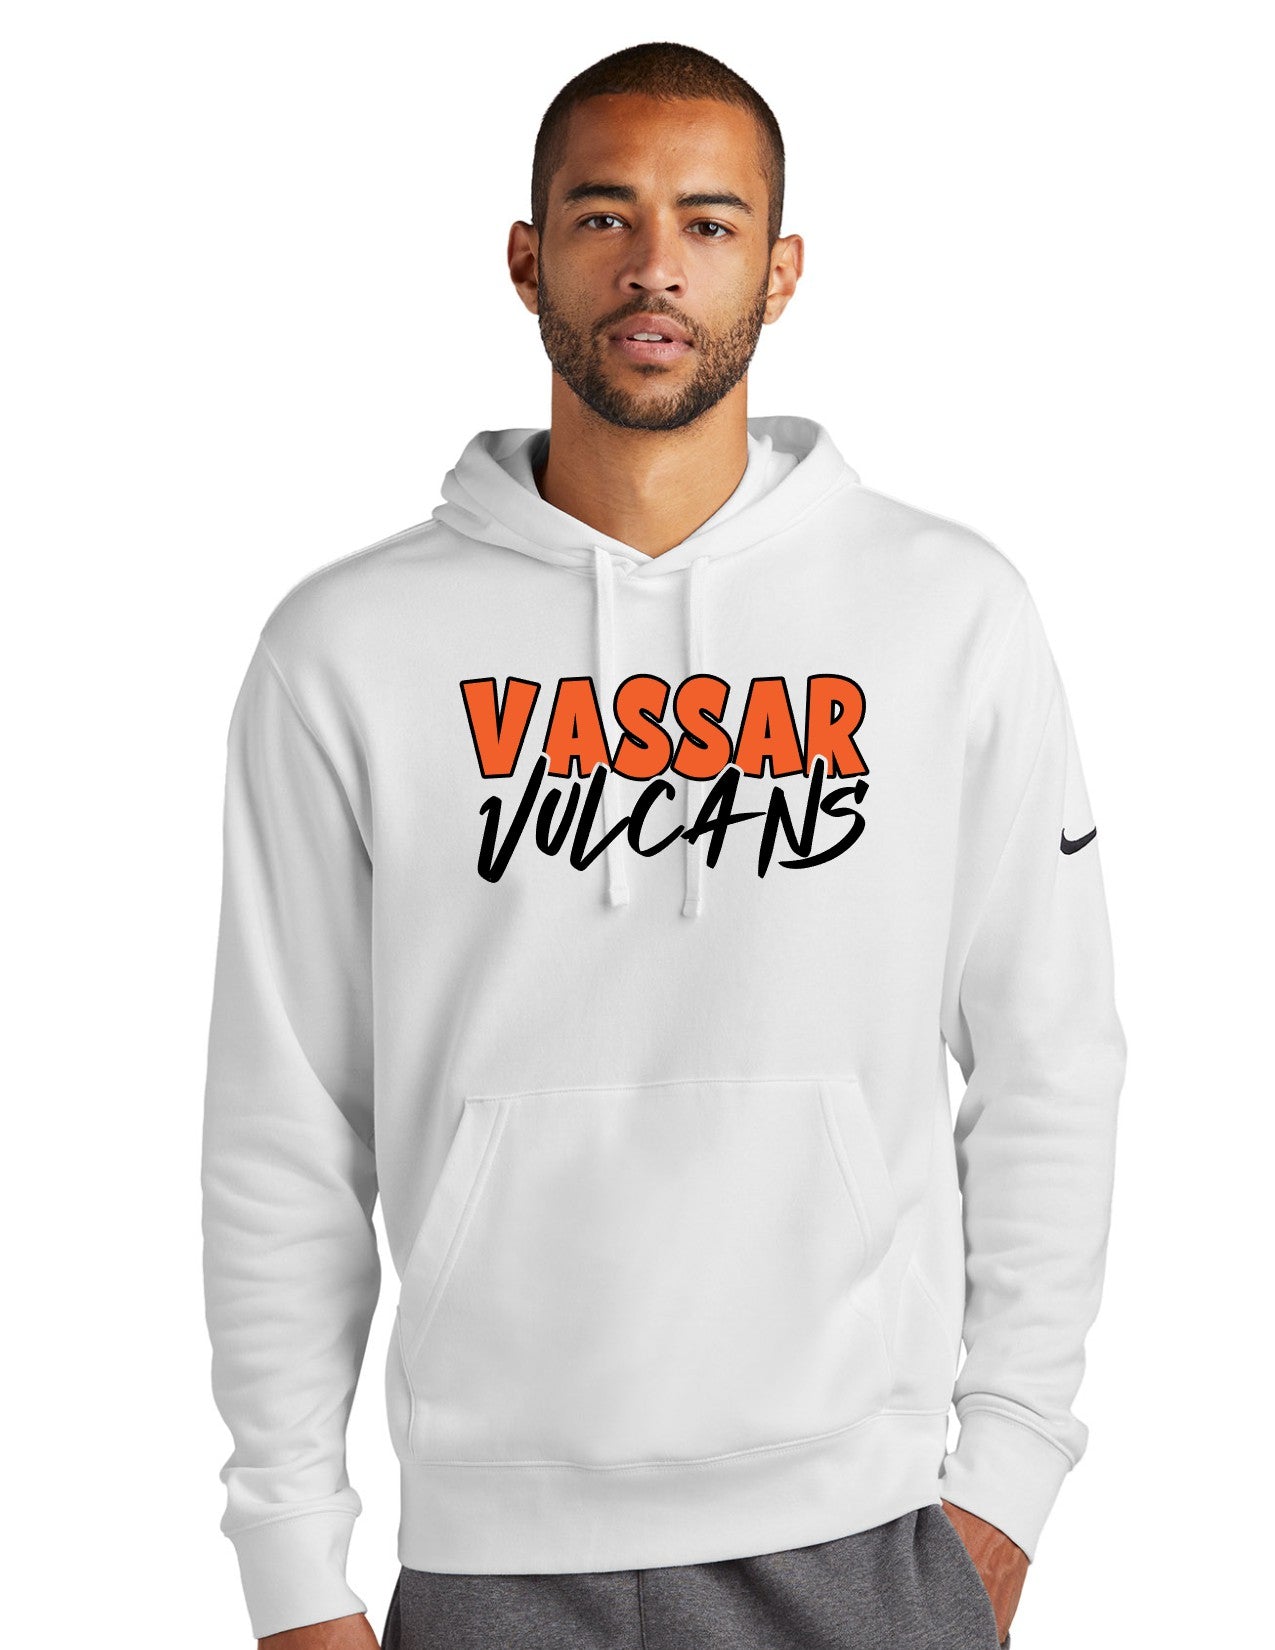 Vassar Vulcans Nike Fleece Pullover Hoodie